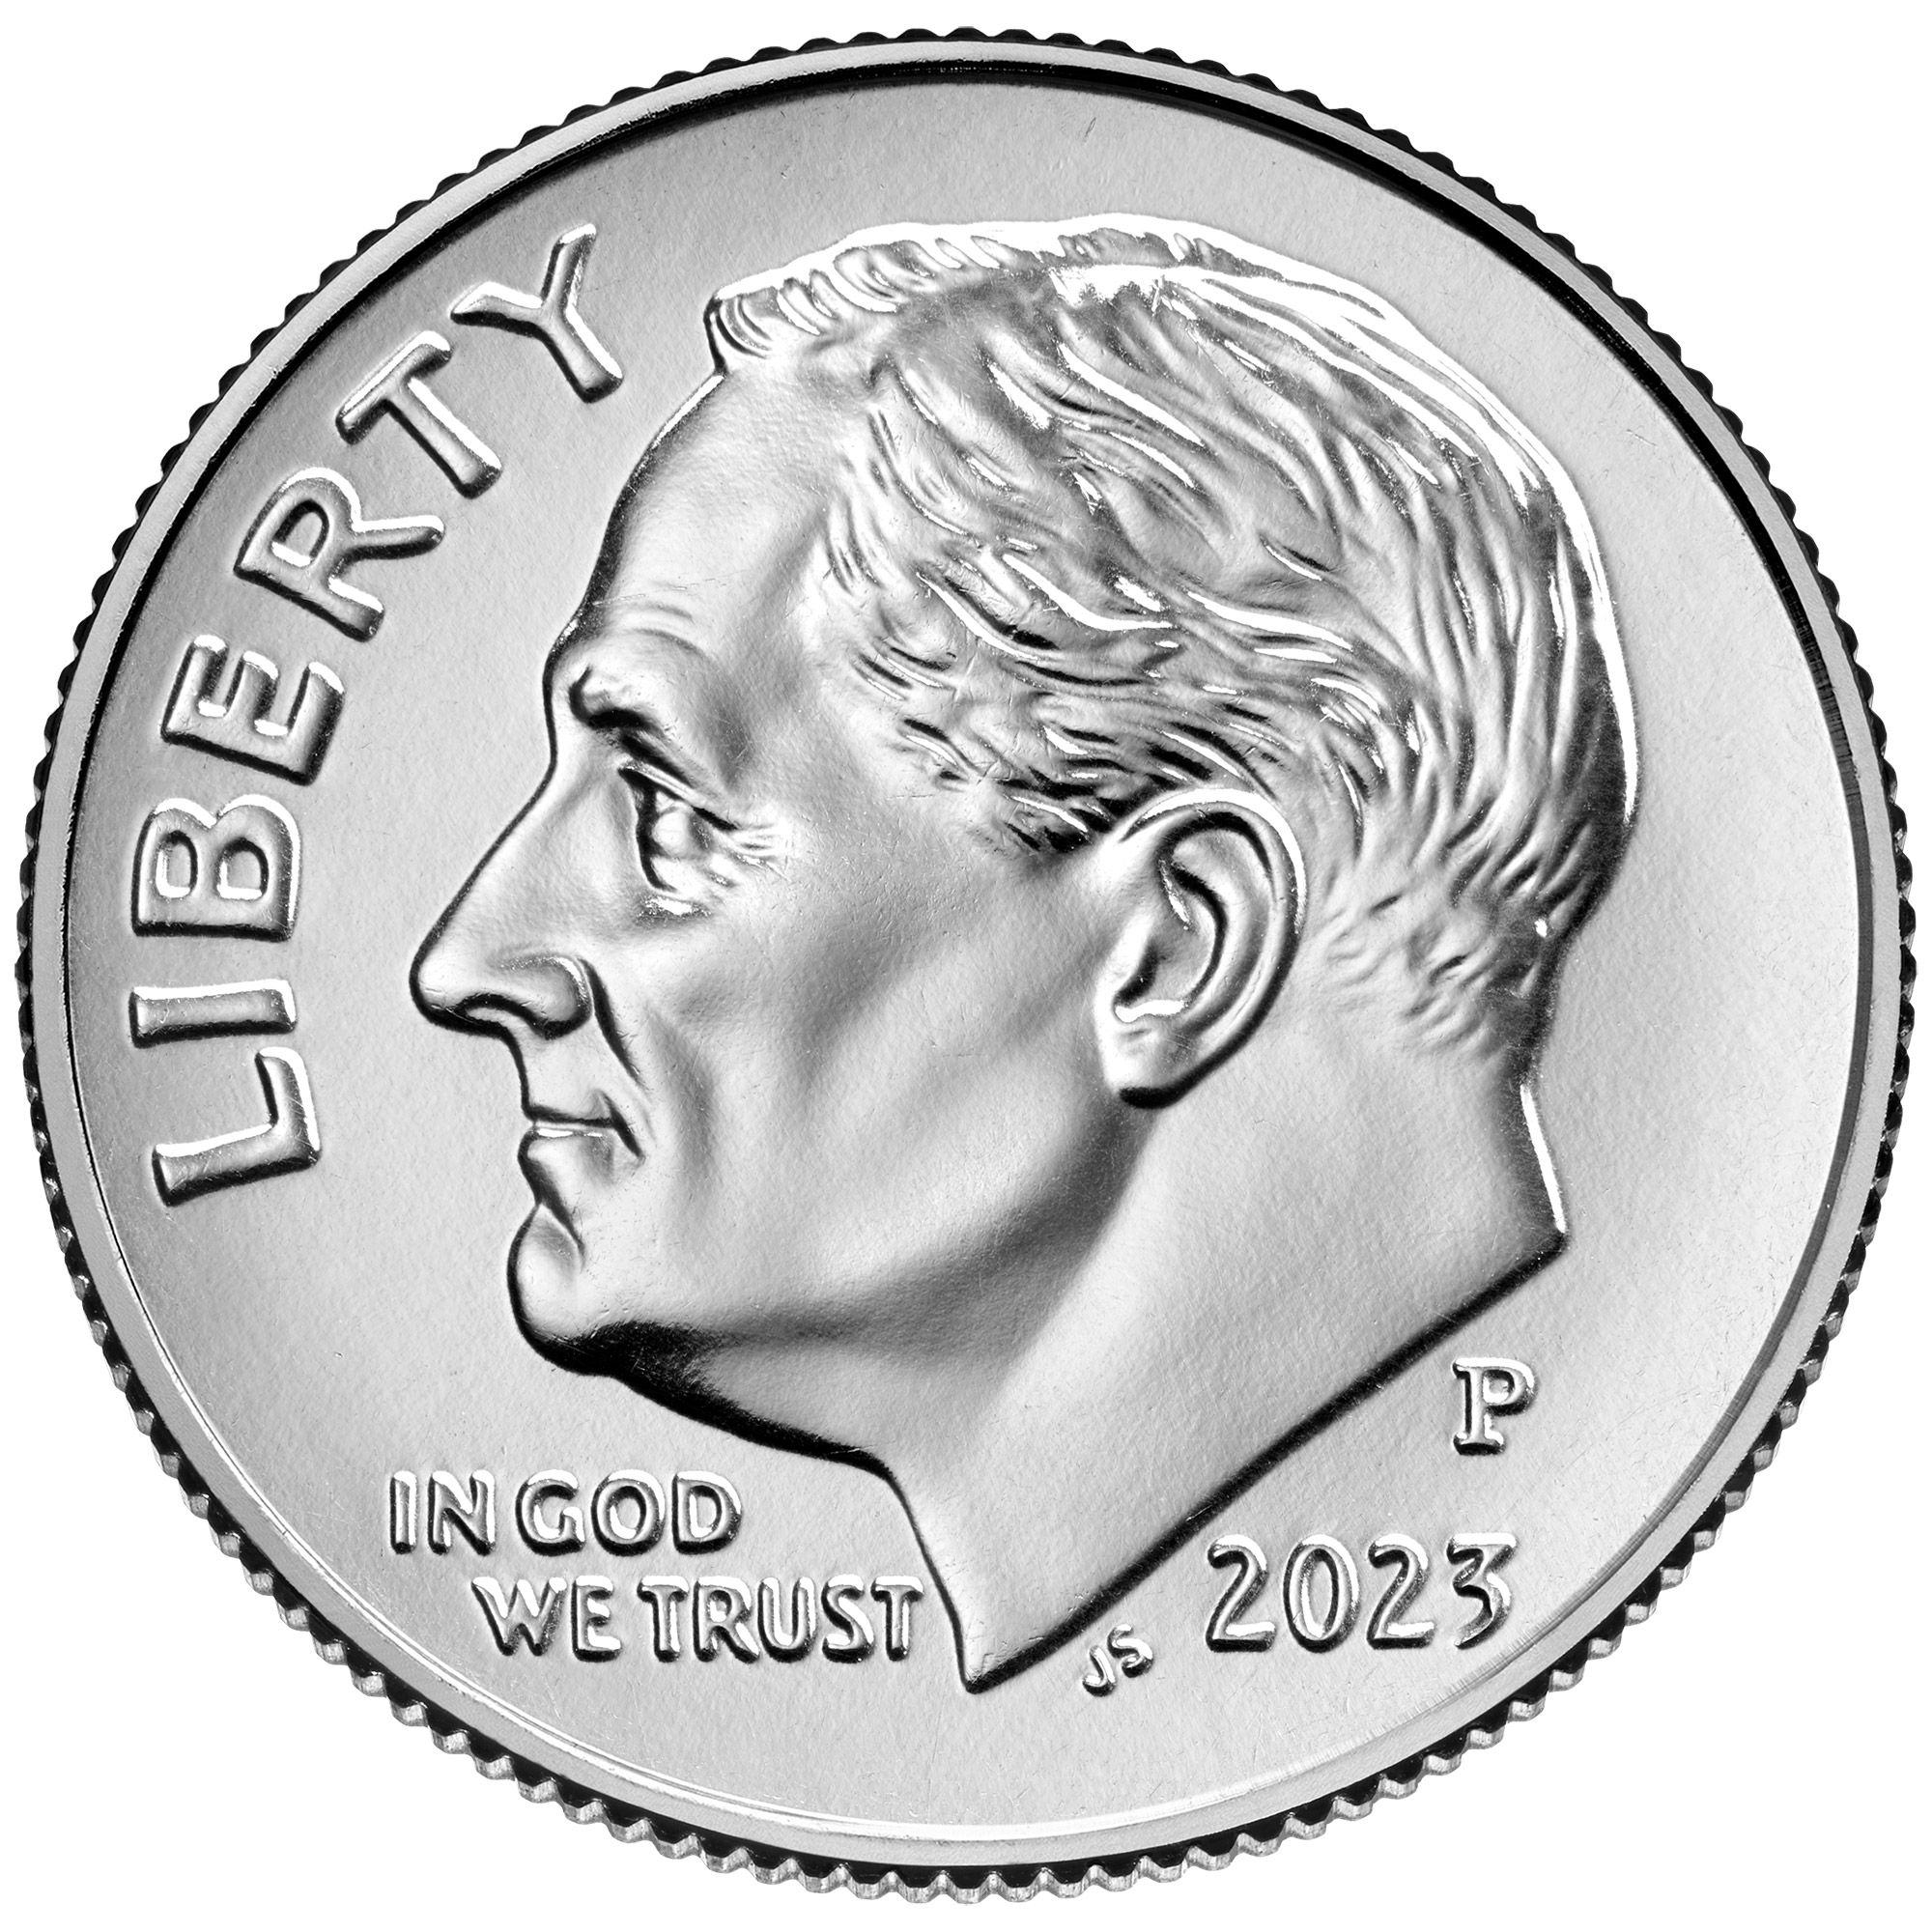 Coin - Wikipedia